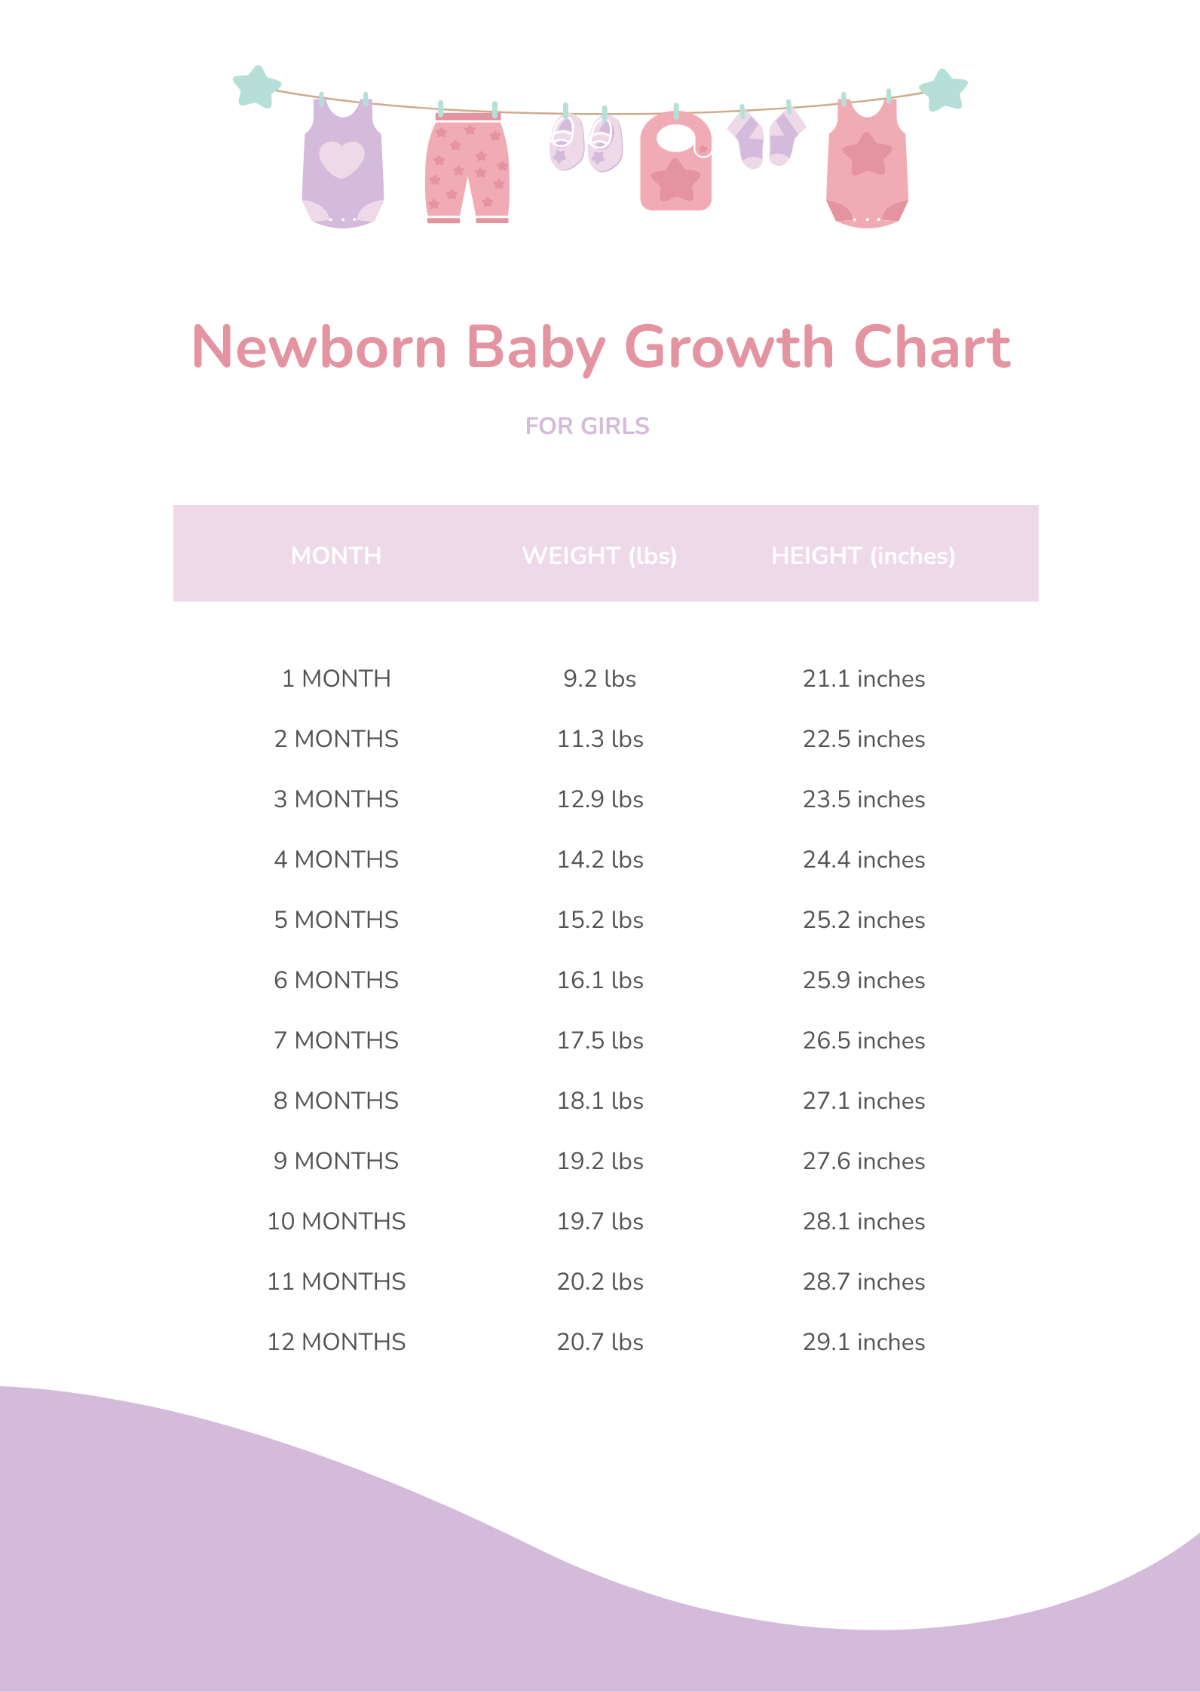 Newborn Baby Growth Chart Template